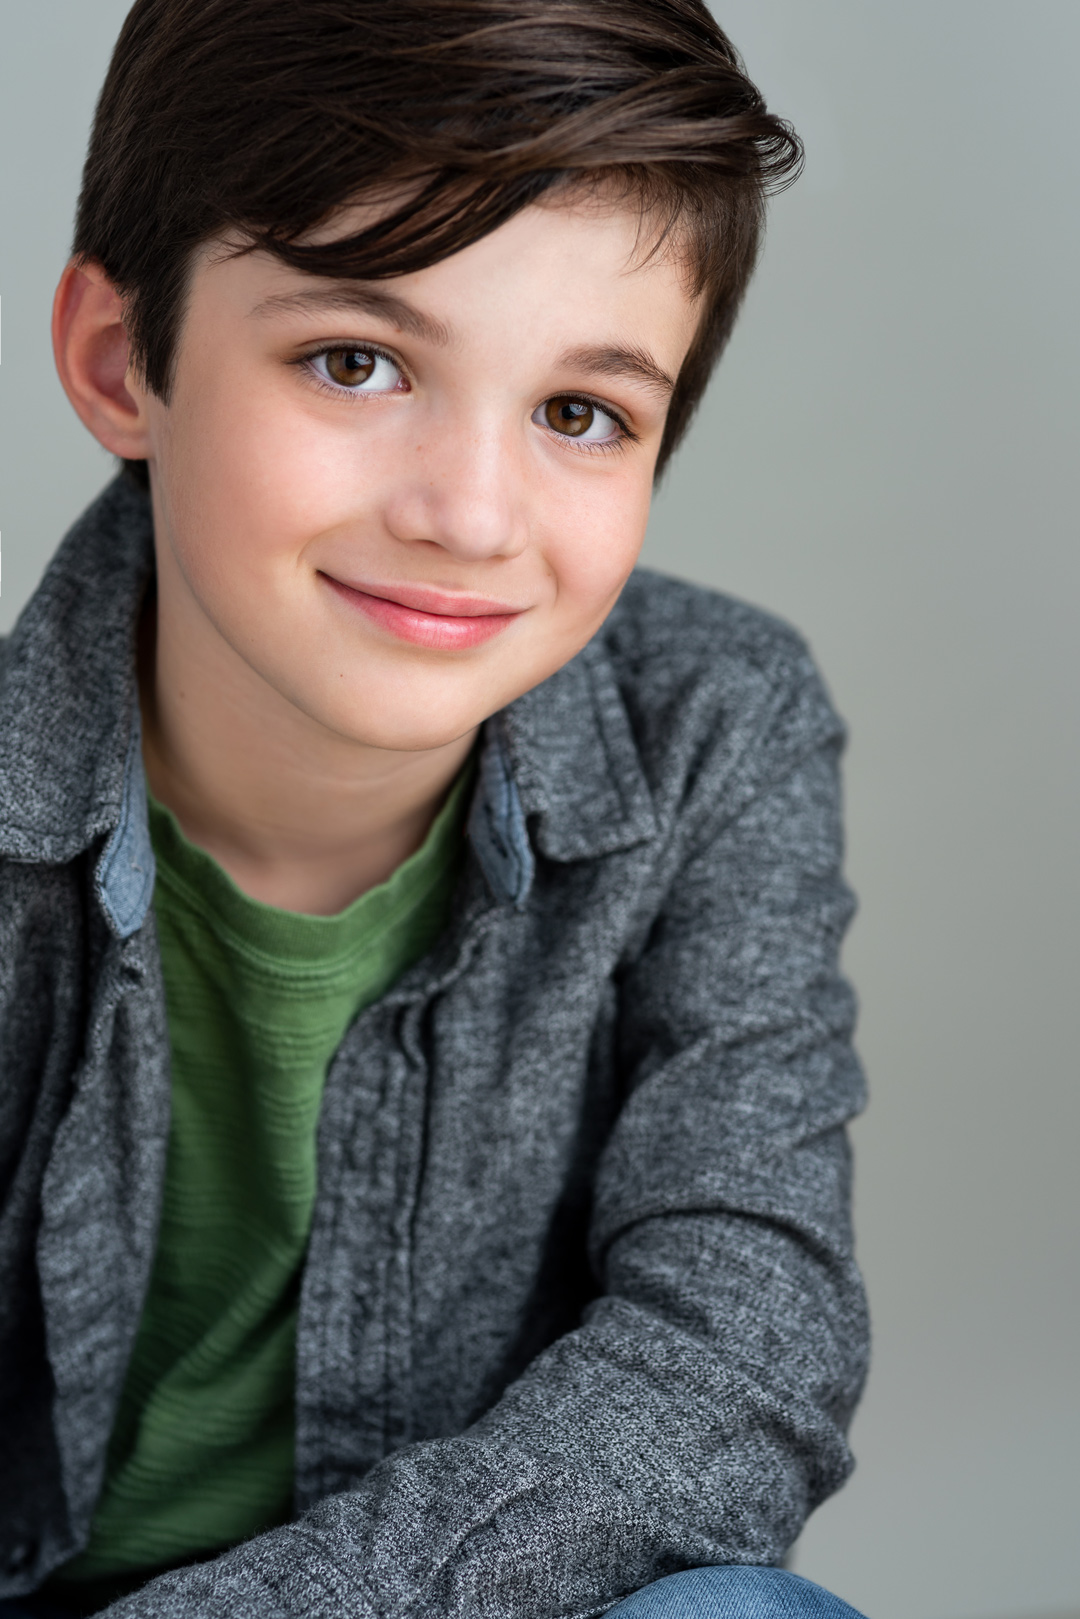 Child actor professional headshot of Matteo Bolognese